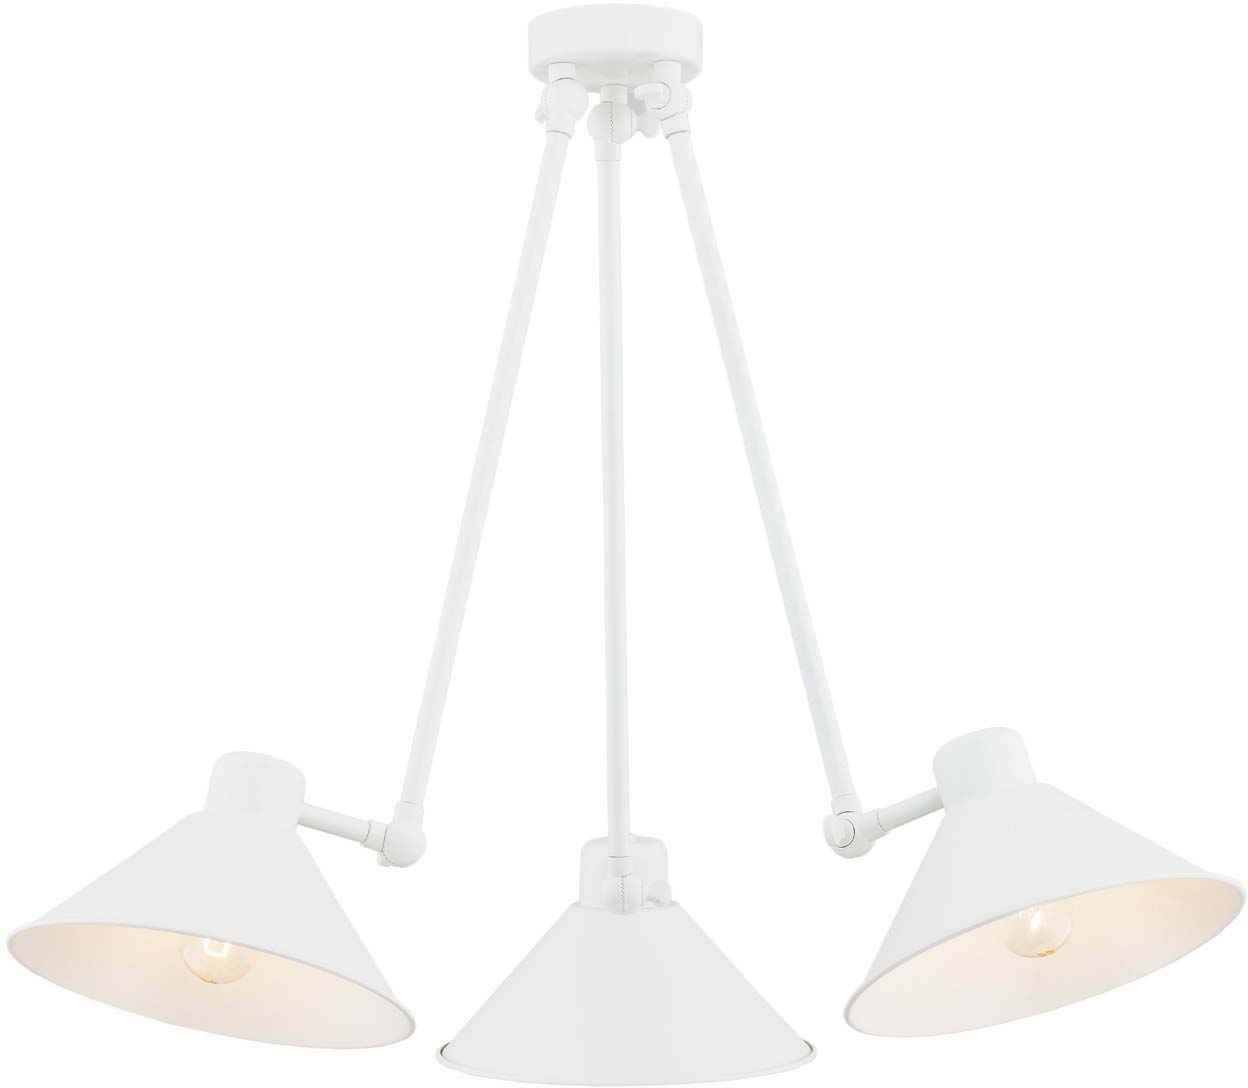 ARGON ALTEA 1451 lampa wisząca 3 pł. kolor biały